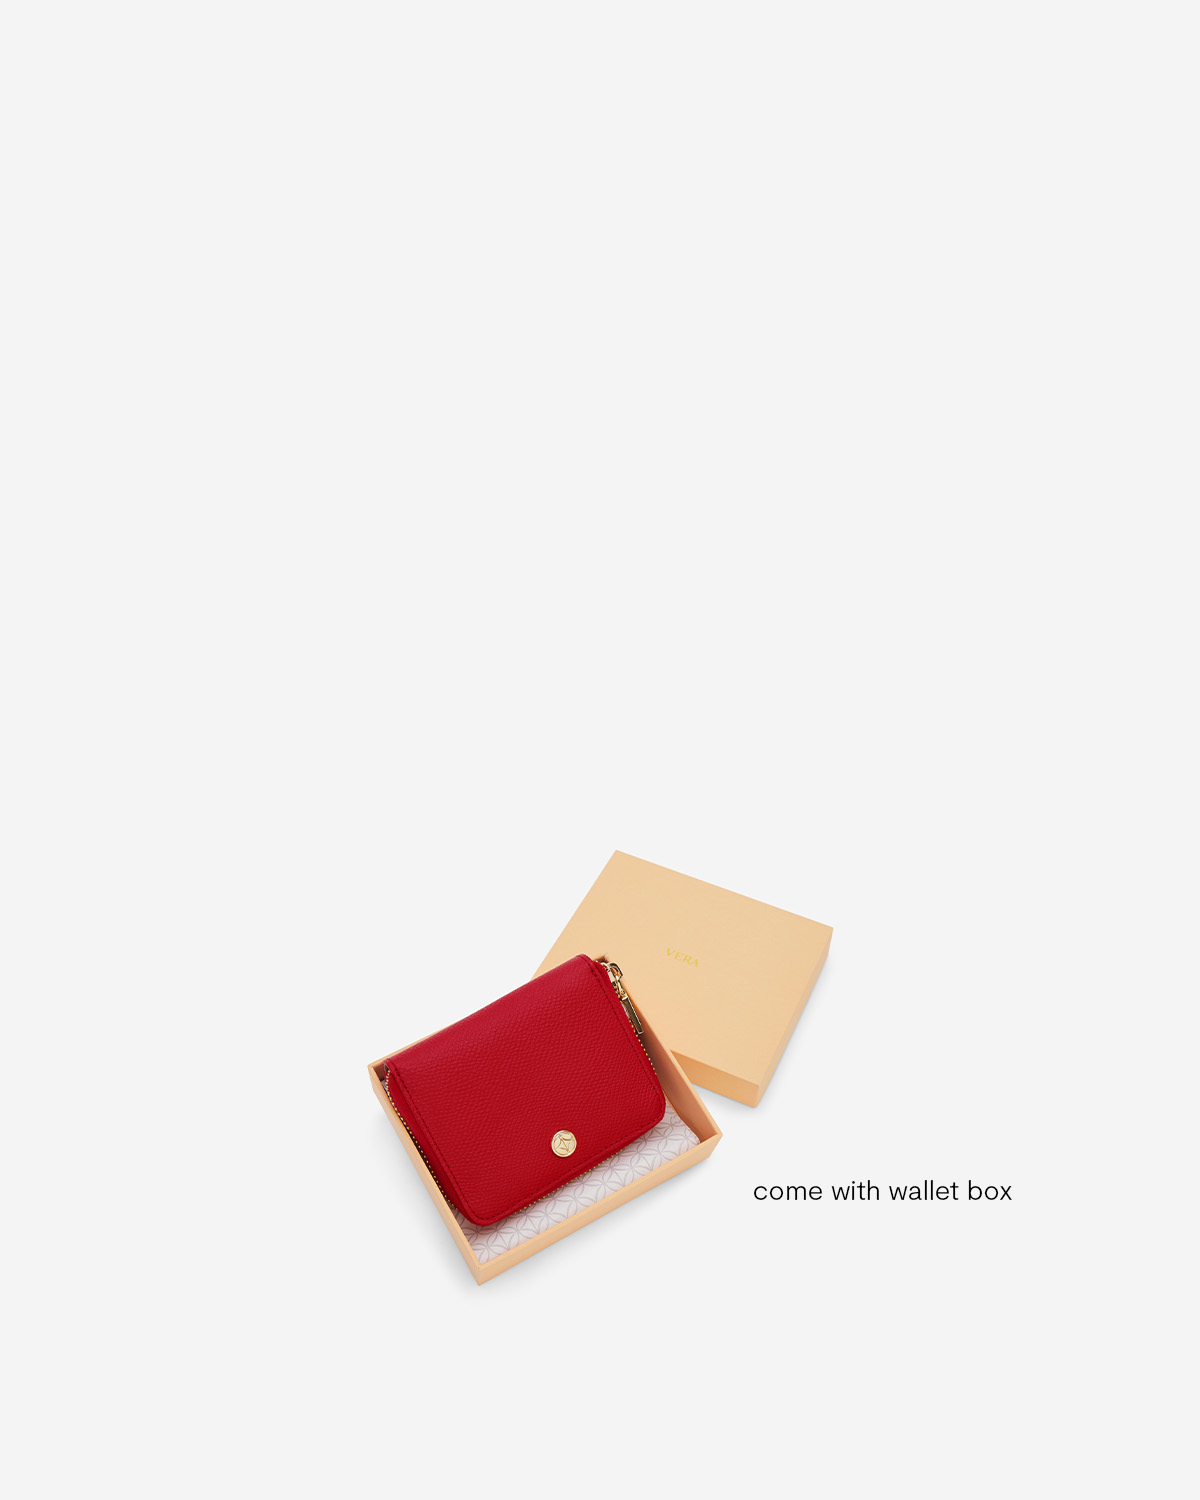 VERA Emily Zipped Wallet in Passionate Red กระเป๋าสตางค์หนังแท้ ทรงสั้น ซิปรอบ สีแดง